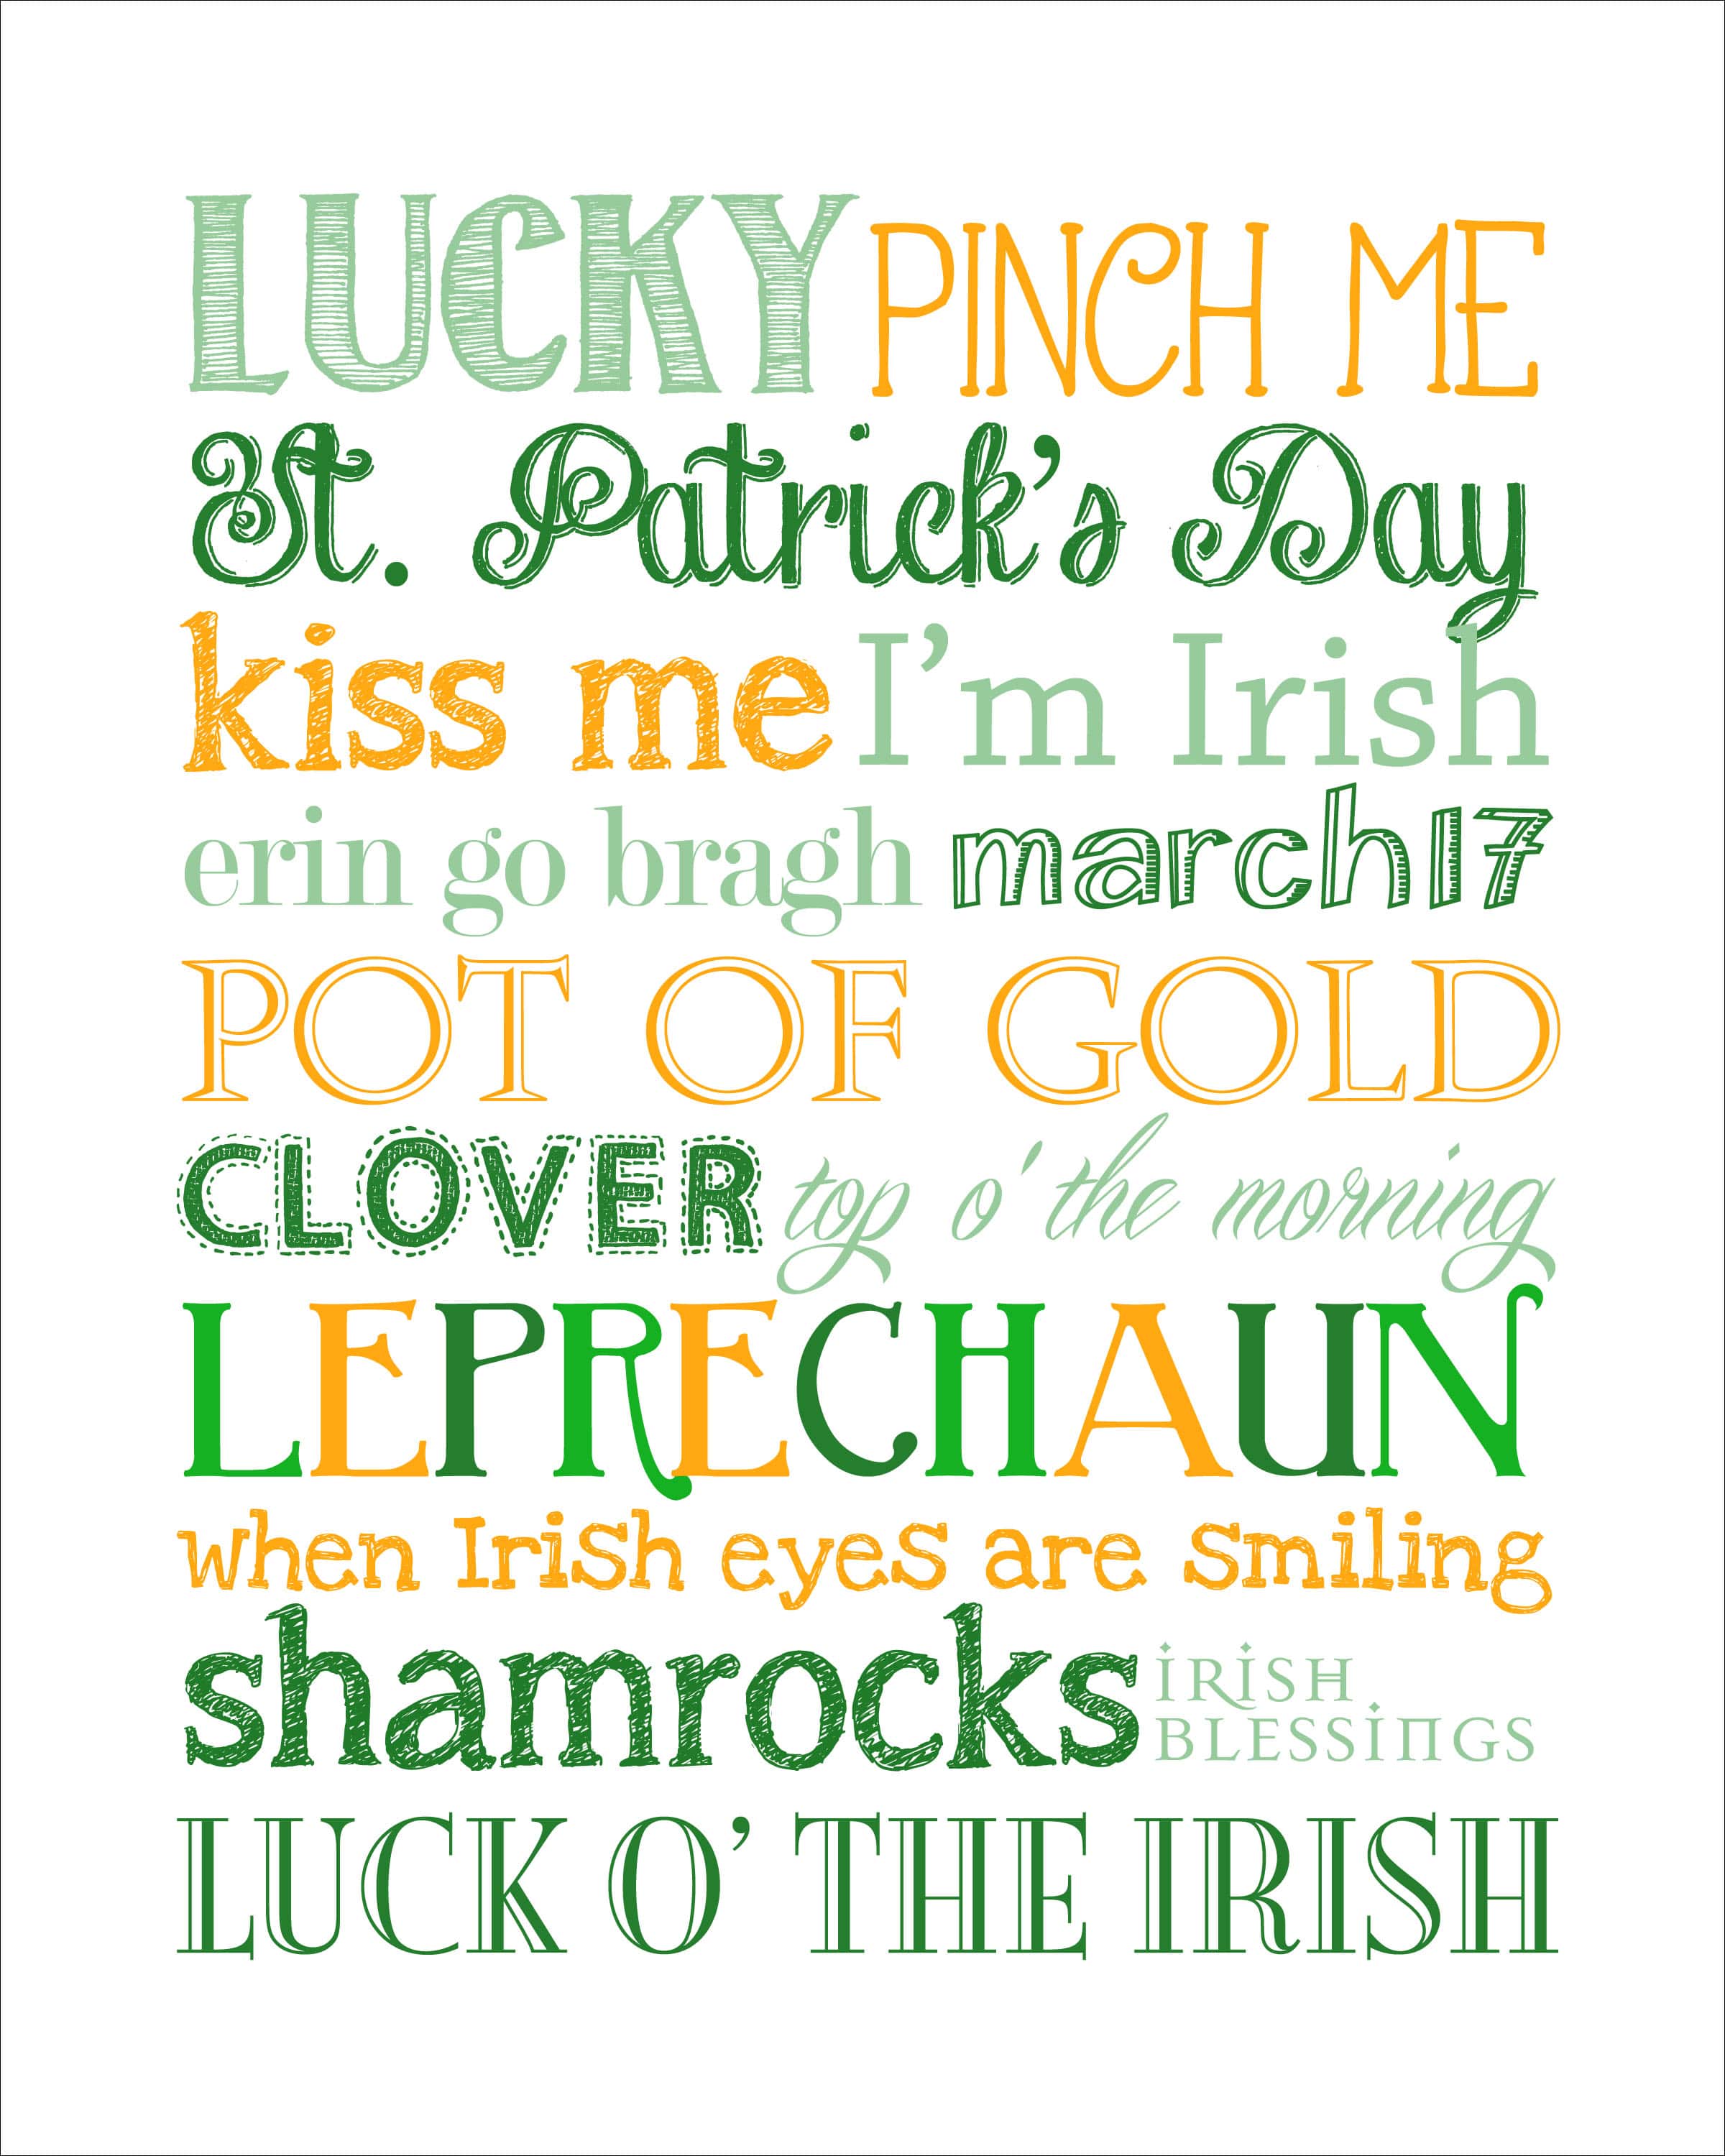 Saint Patrick's Day Saying